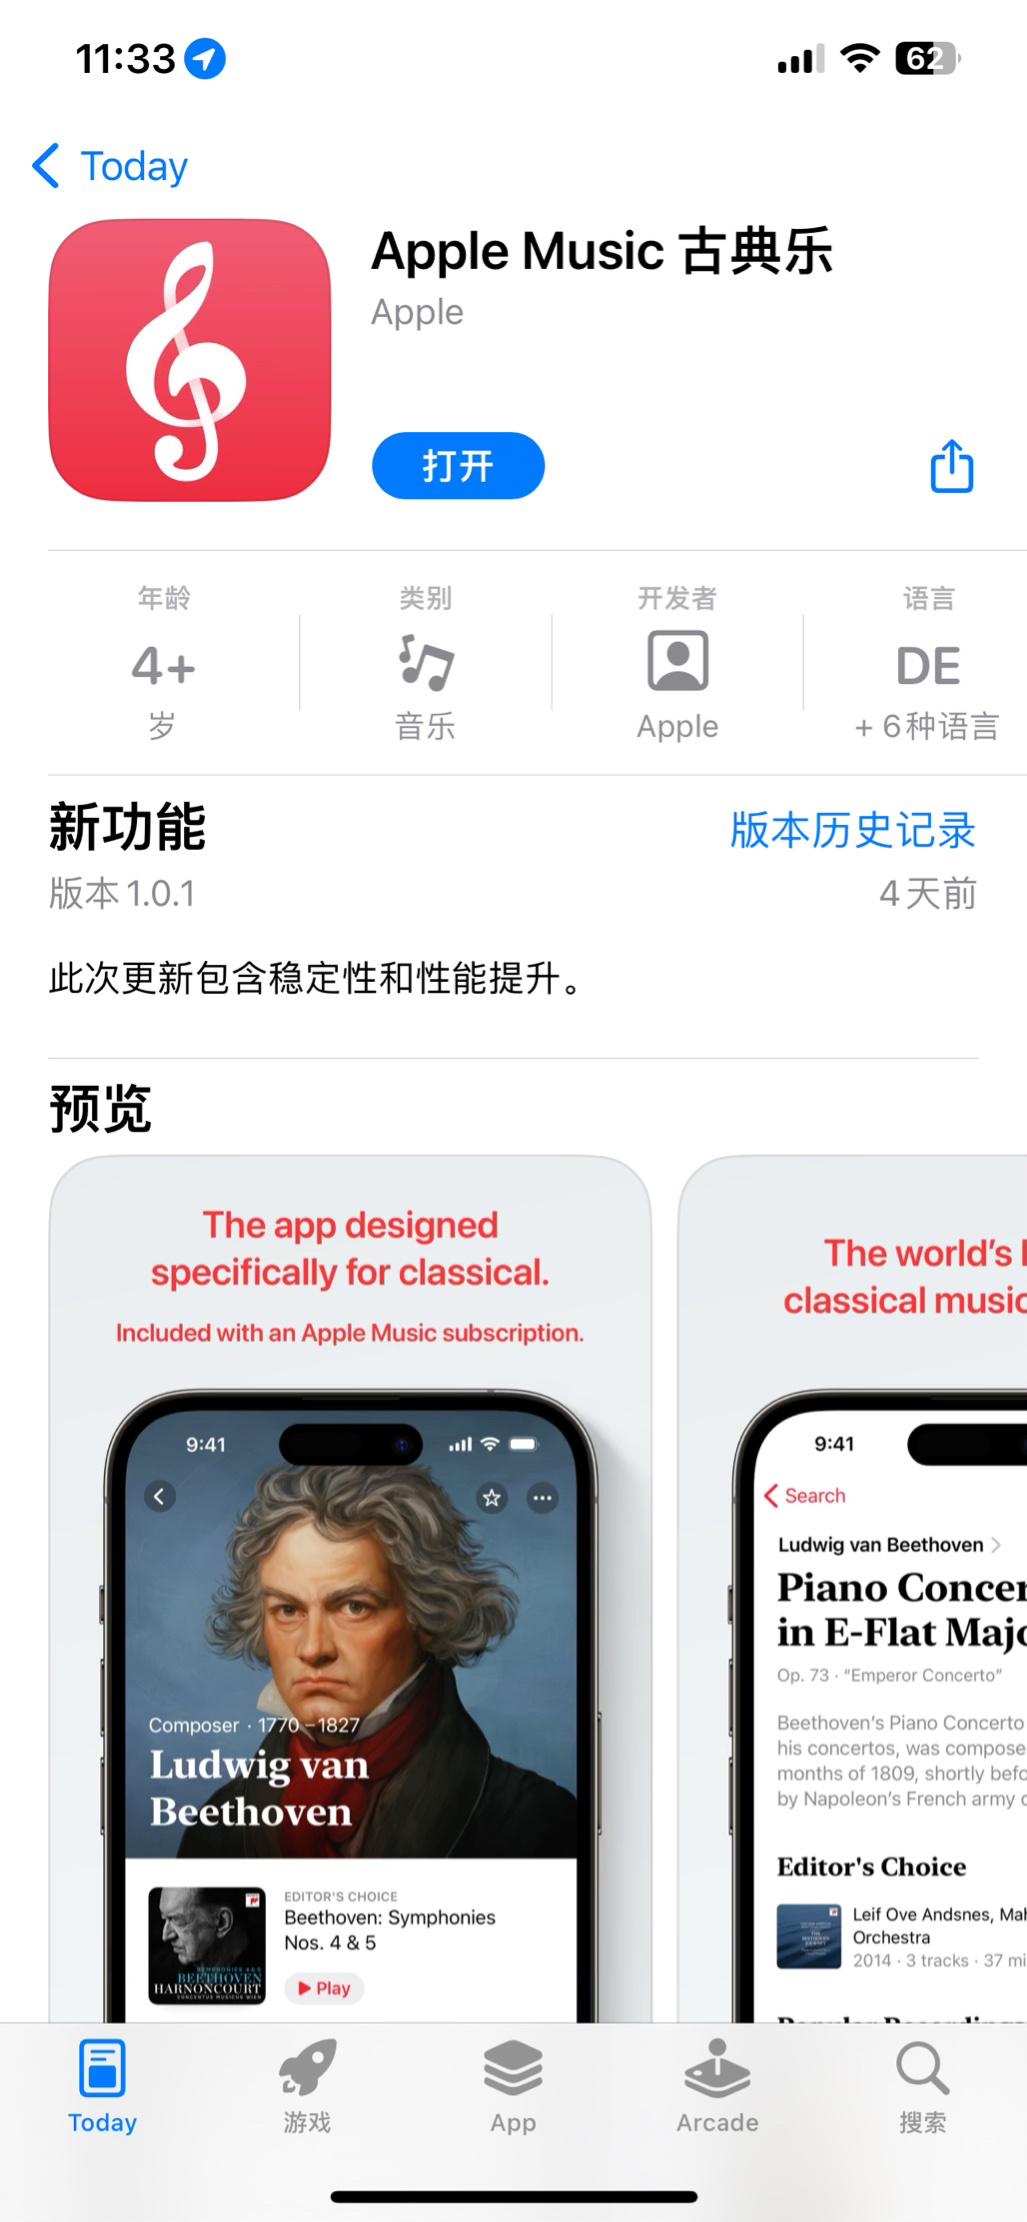 Apple Music Classical 古典乐上架App Store，苹果官方解释原因